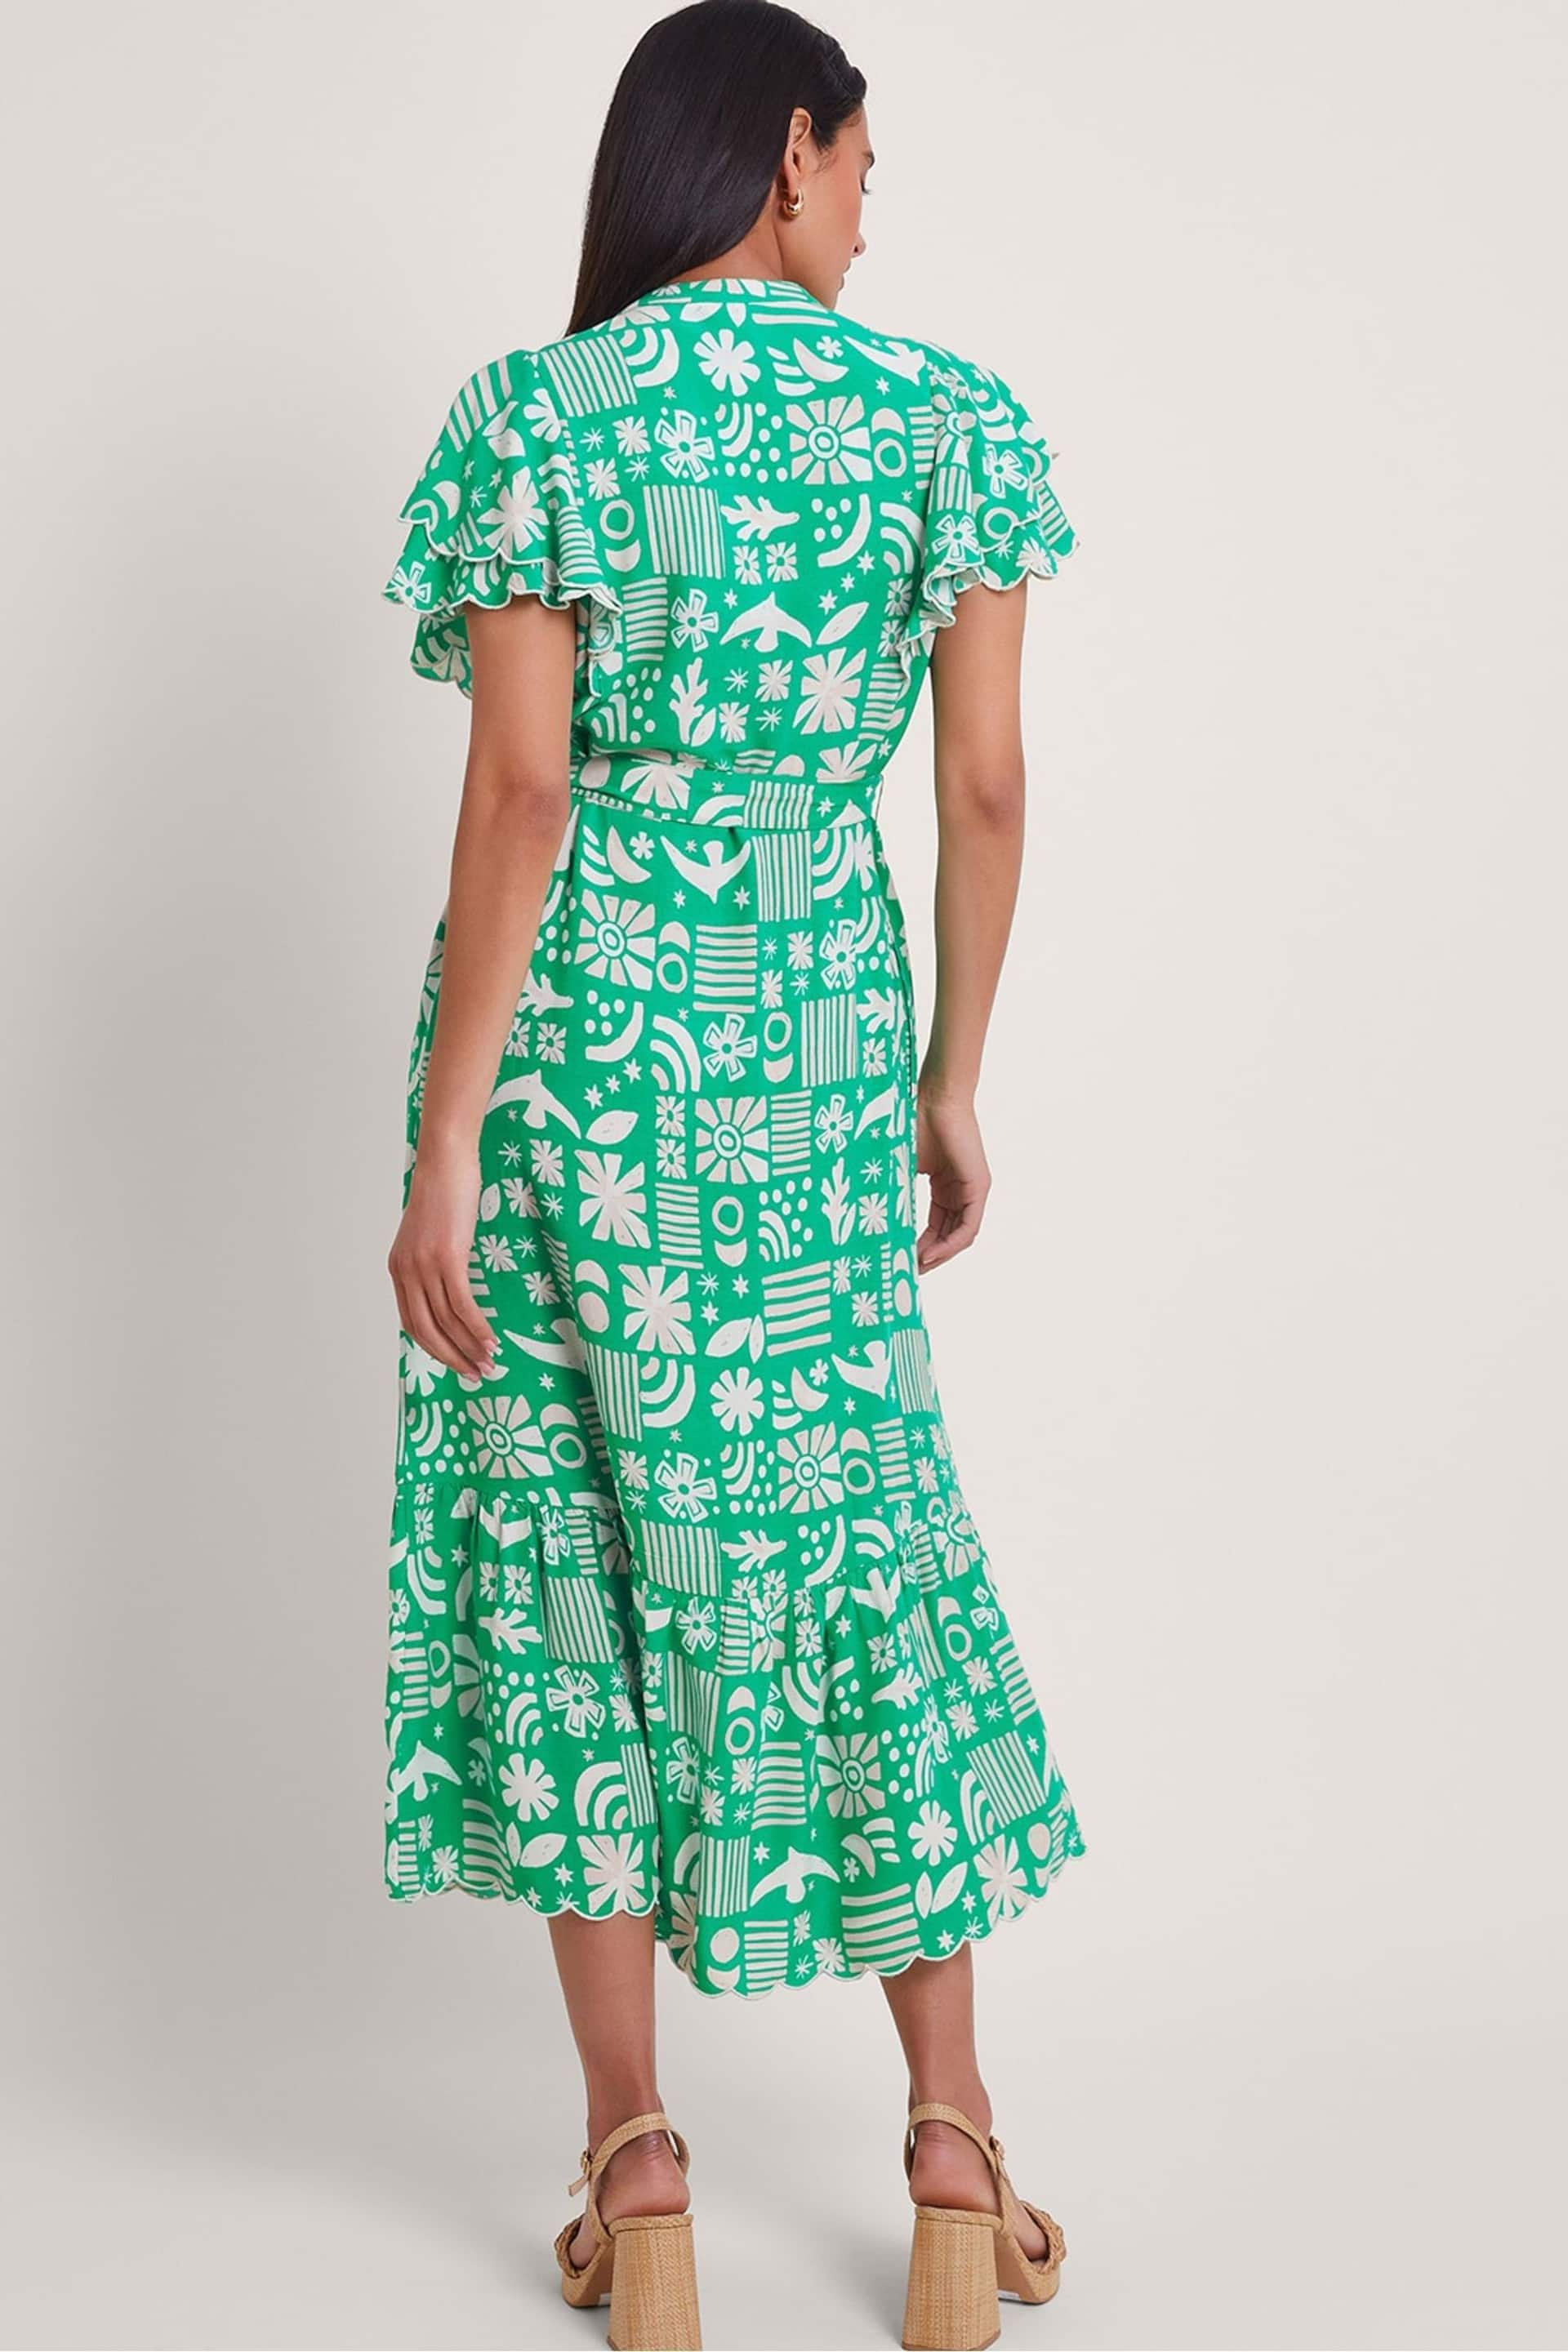 Monsoon Green Dario Print Dress - Image 2 of 5